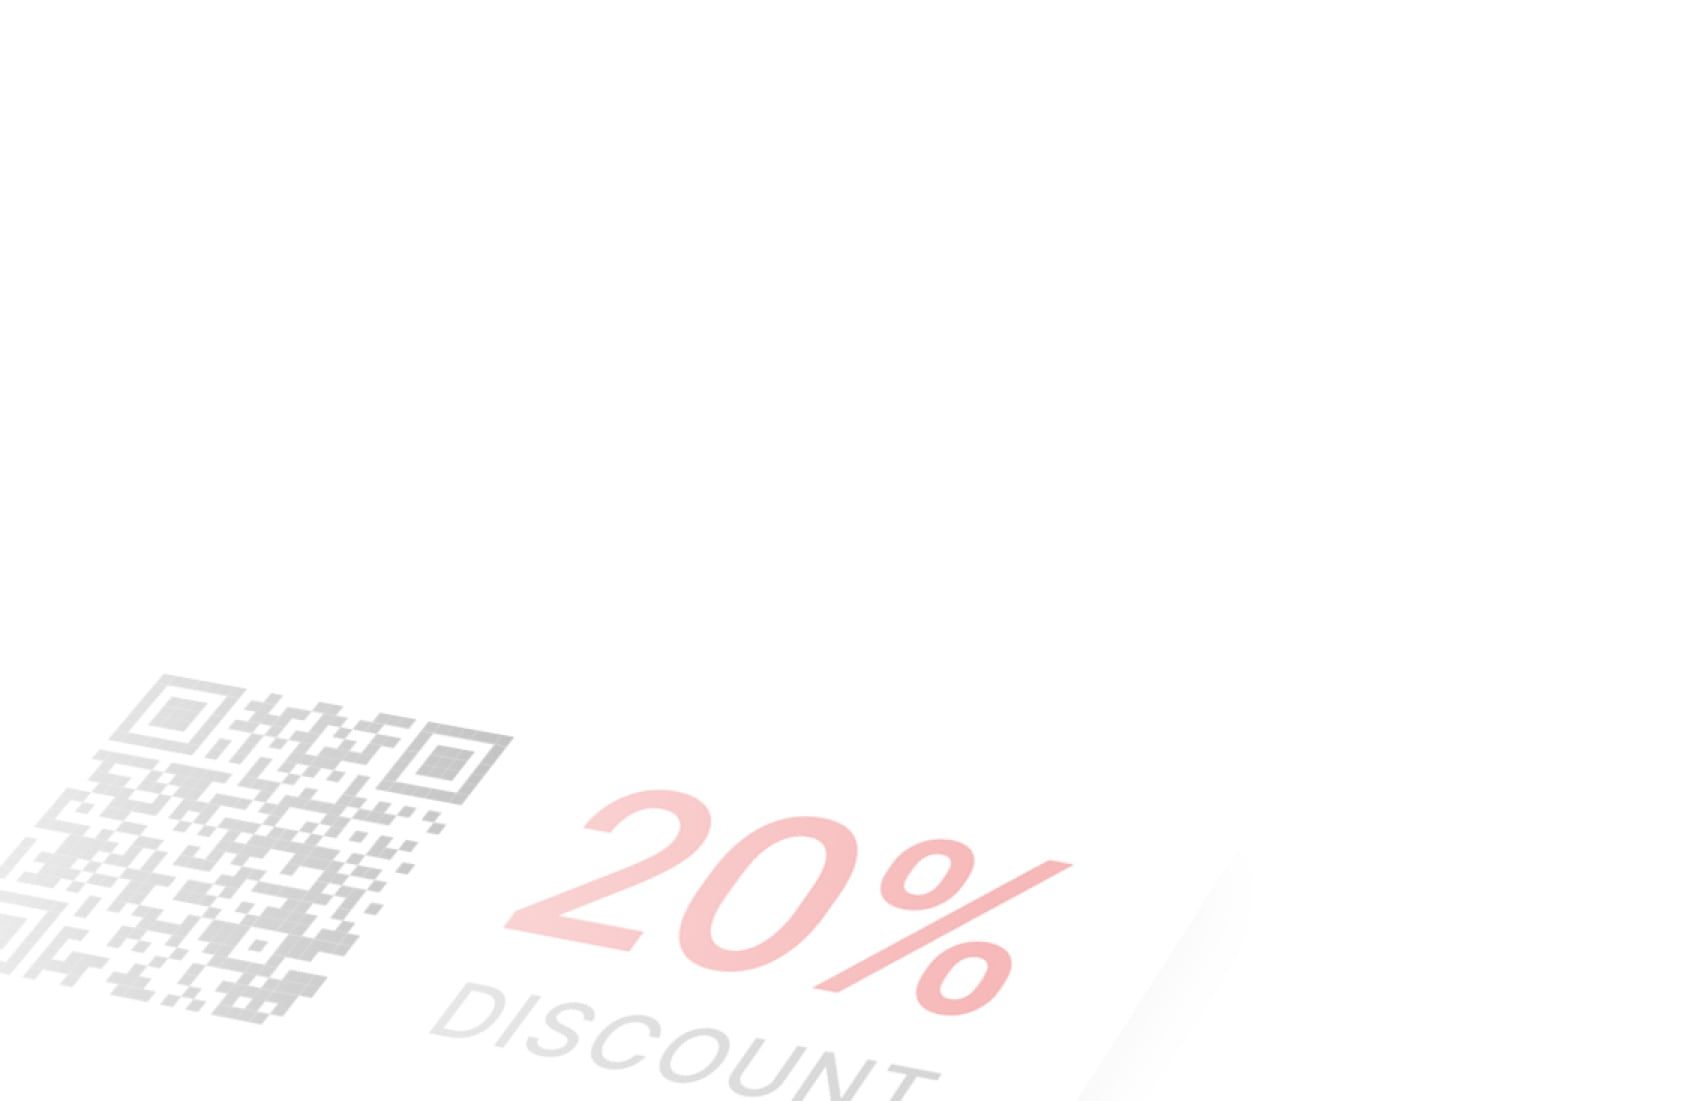 discount image in ecommerce app